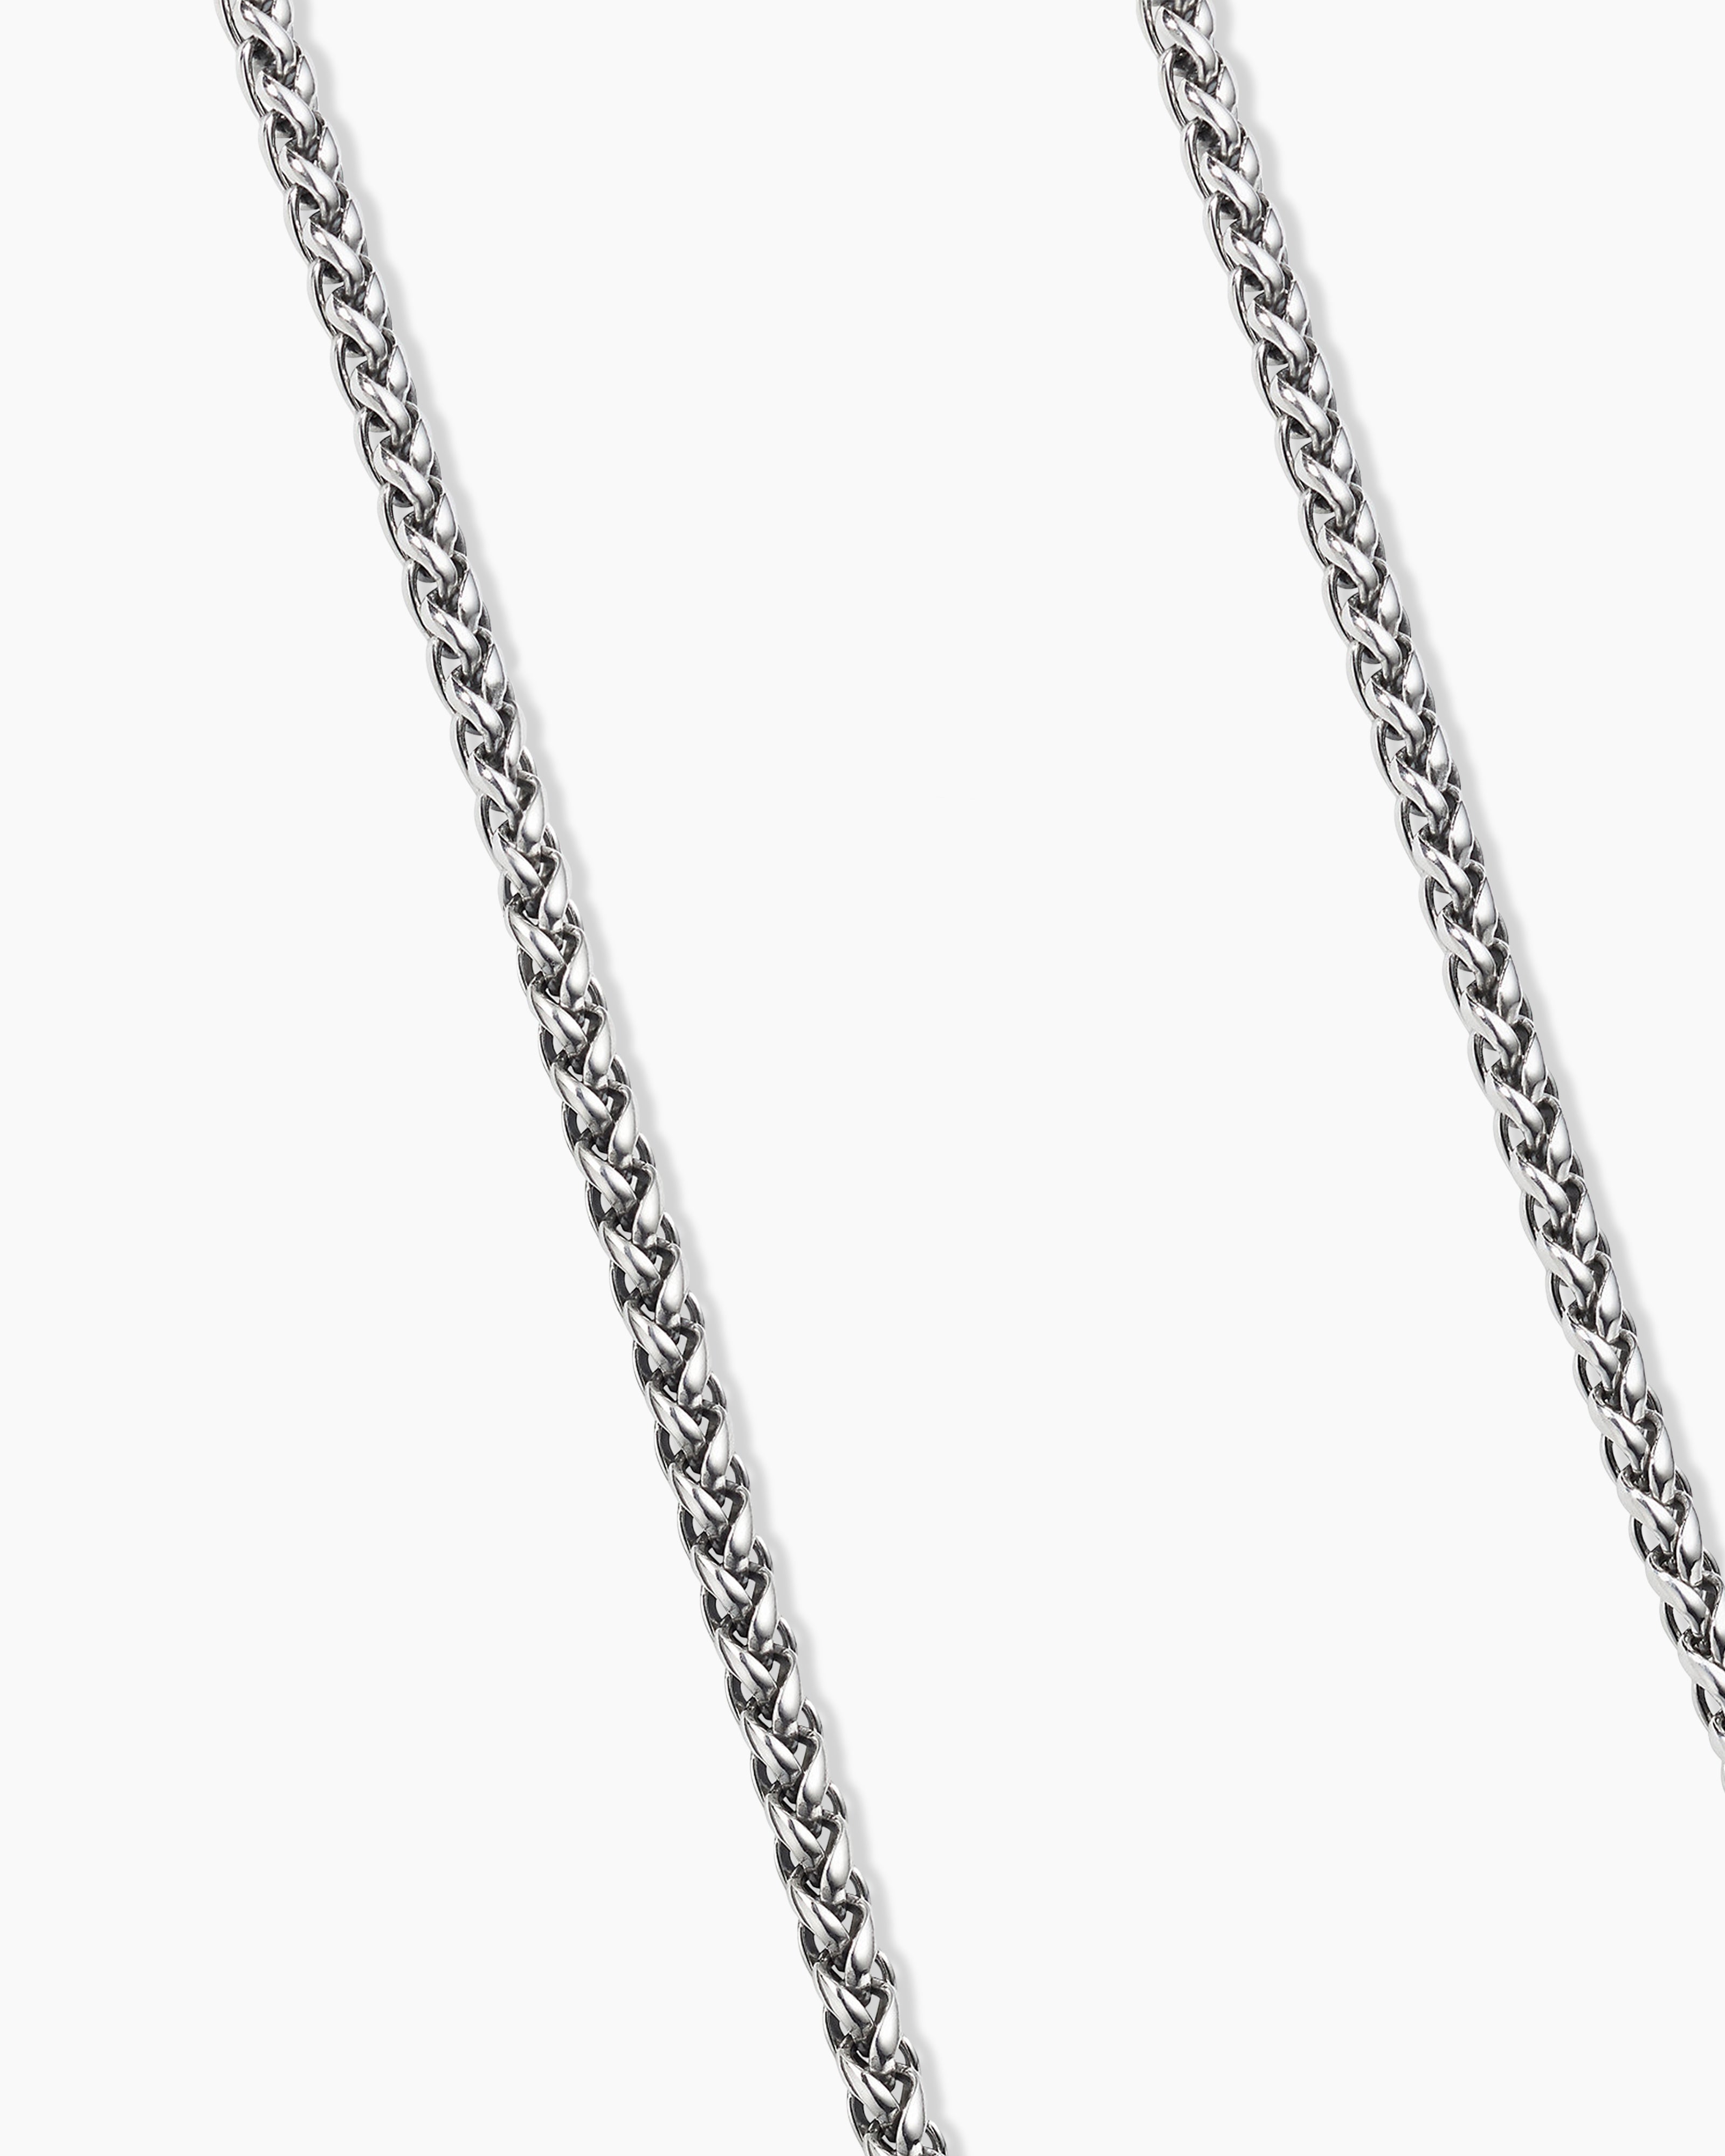 Wheat Chain Necklace in Sterling Silver, 4mm | David Yurman EU